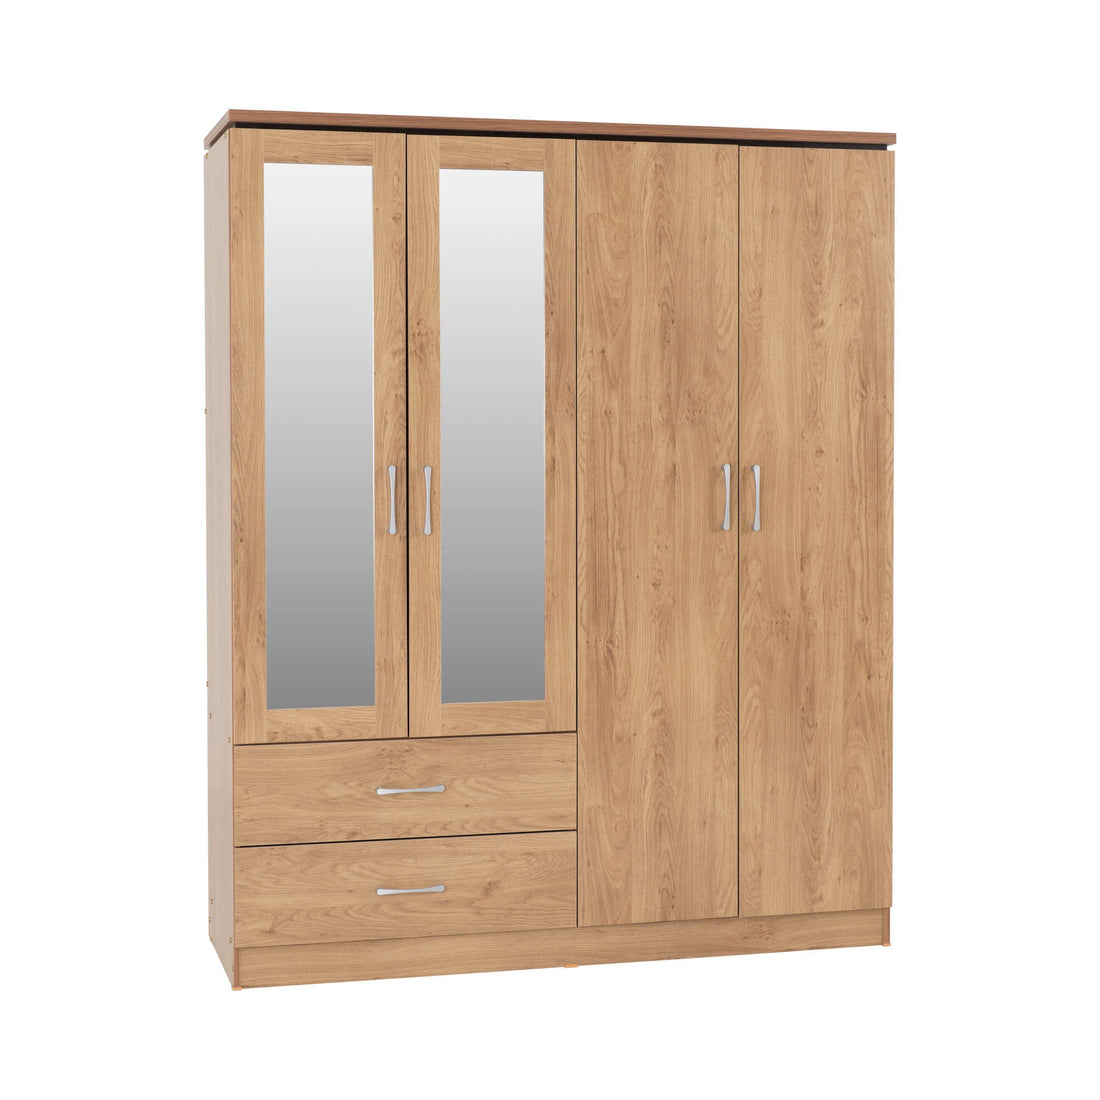 Charles 4 Door 2 Drawer Mirrored Wardrobe (Oak Effect Veneer with Walnut Trim)